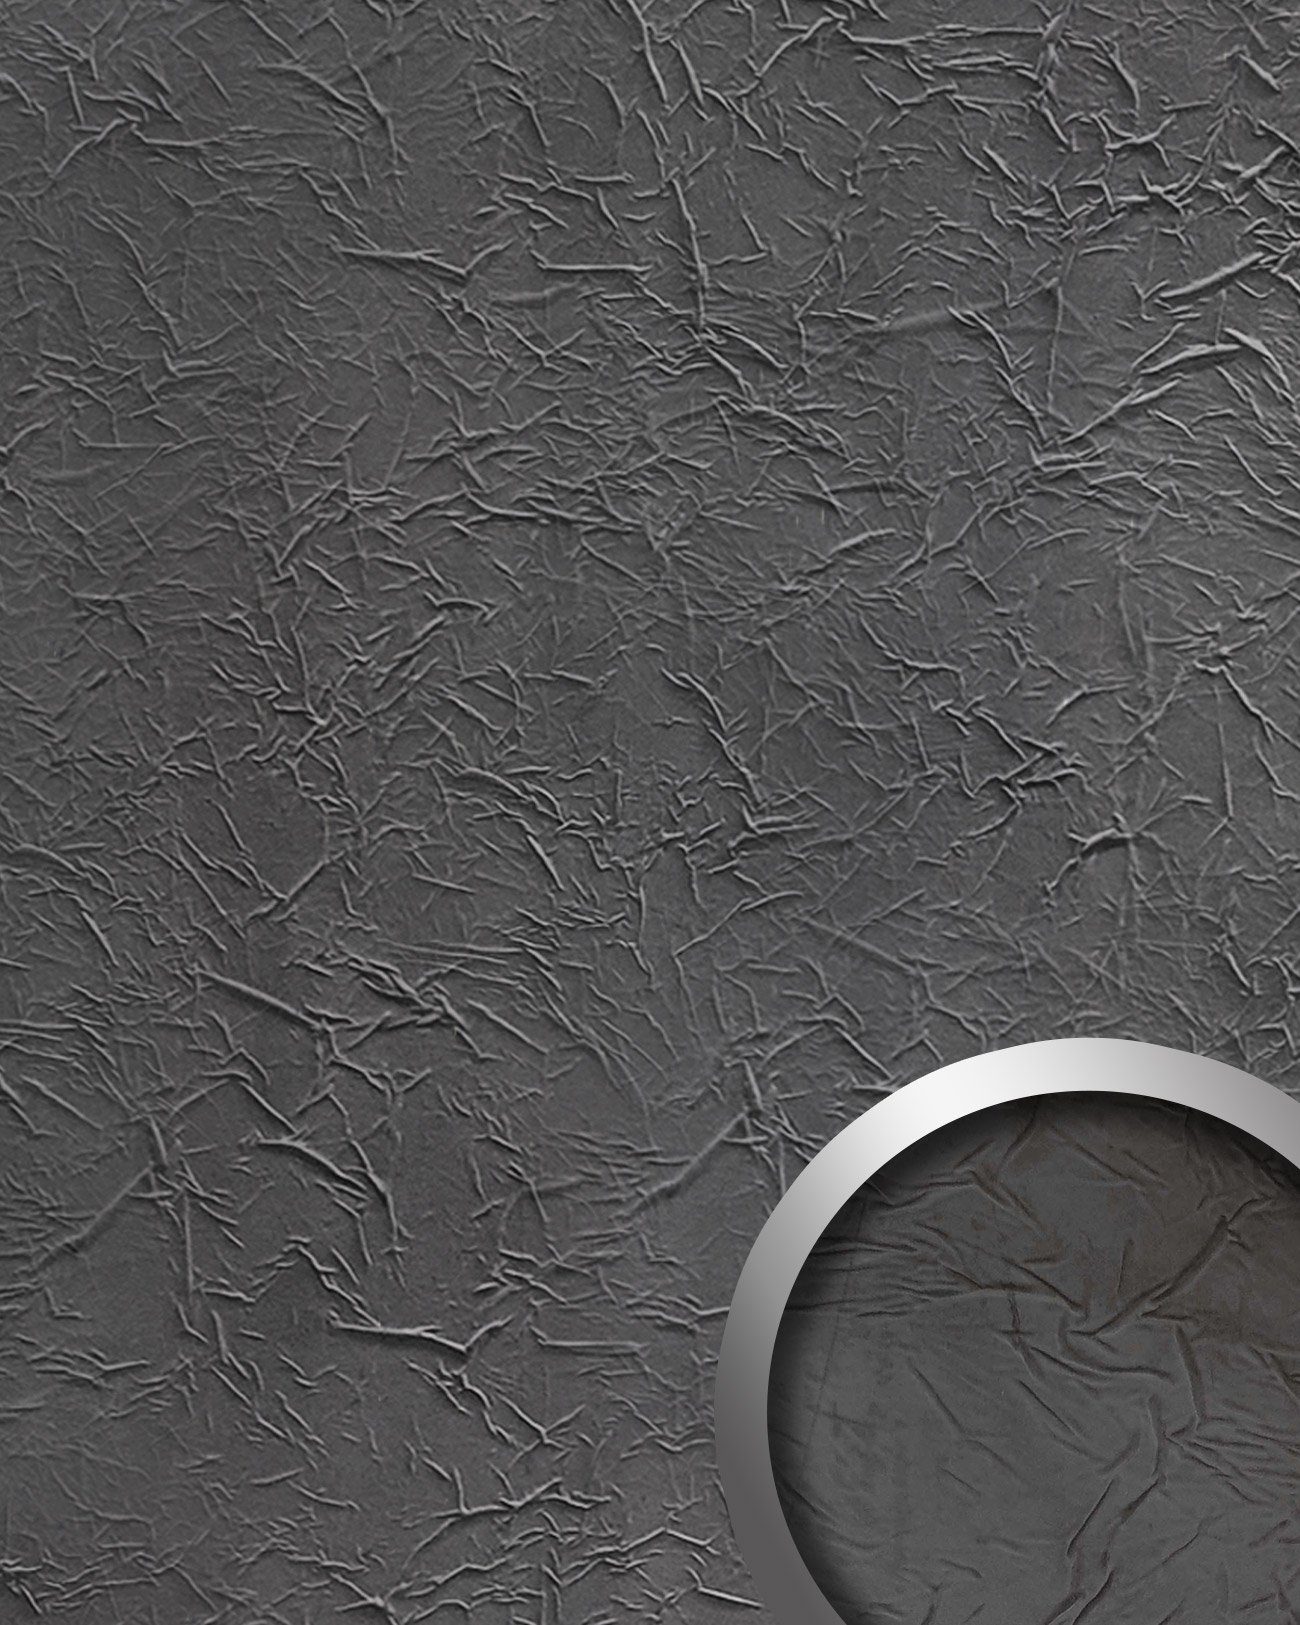 Wallface Dekorpaneele 22717-SA, BxL: 100x260 cm, 2.6 qm, (Dekorpaneel, 1-tlg., Wandverkleidung in Leder-Optik) selbstklebend, grau, matt, samtig weich